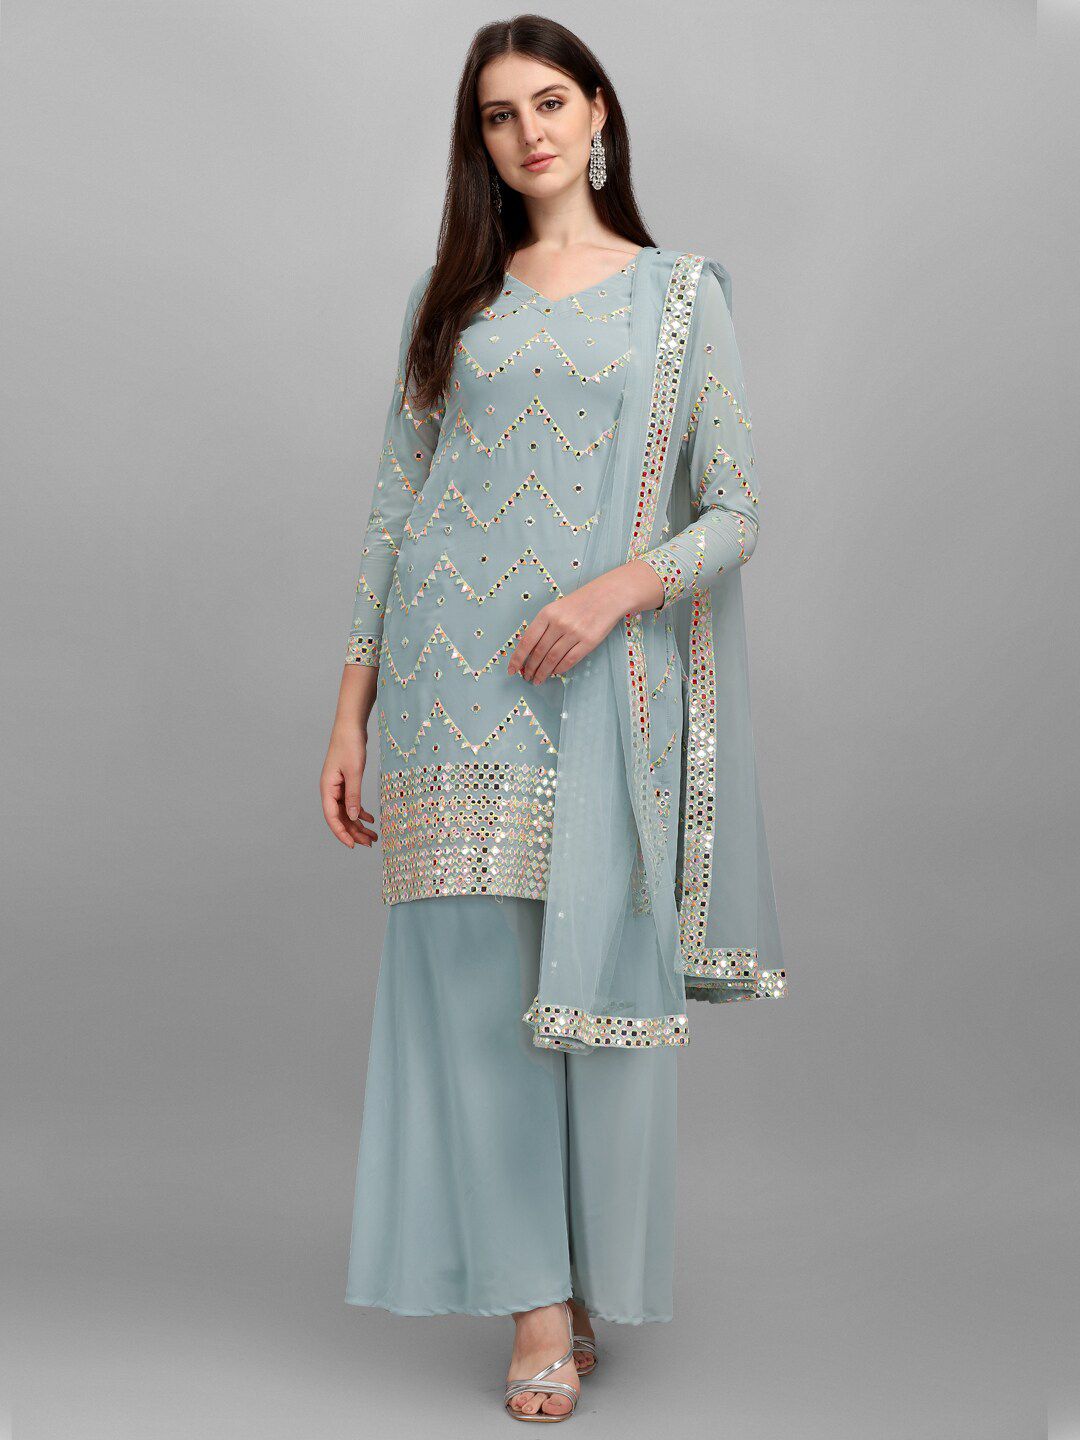 JATRIQQ Women Grey Embroidered Semi-Stitched Dress Material Price in India